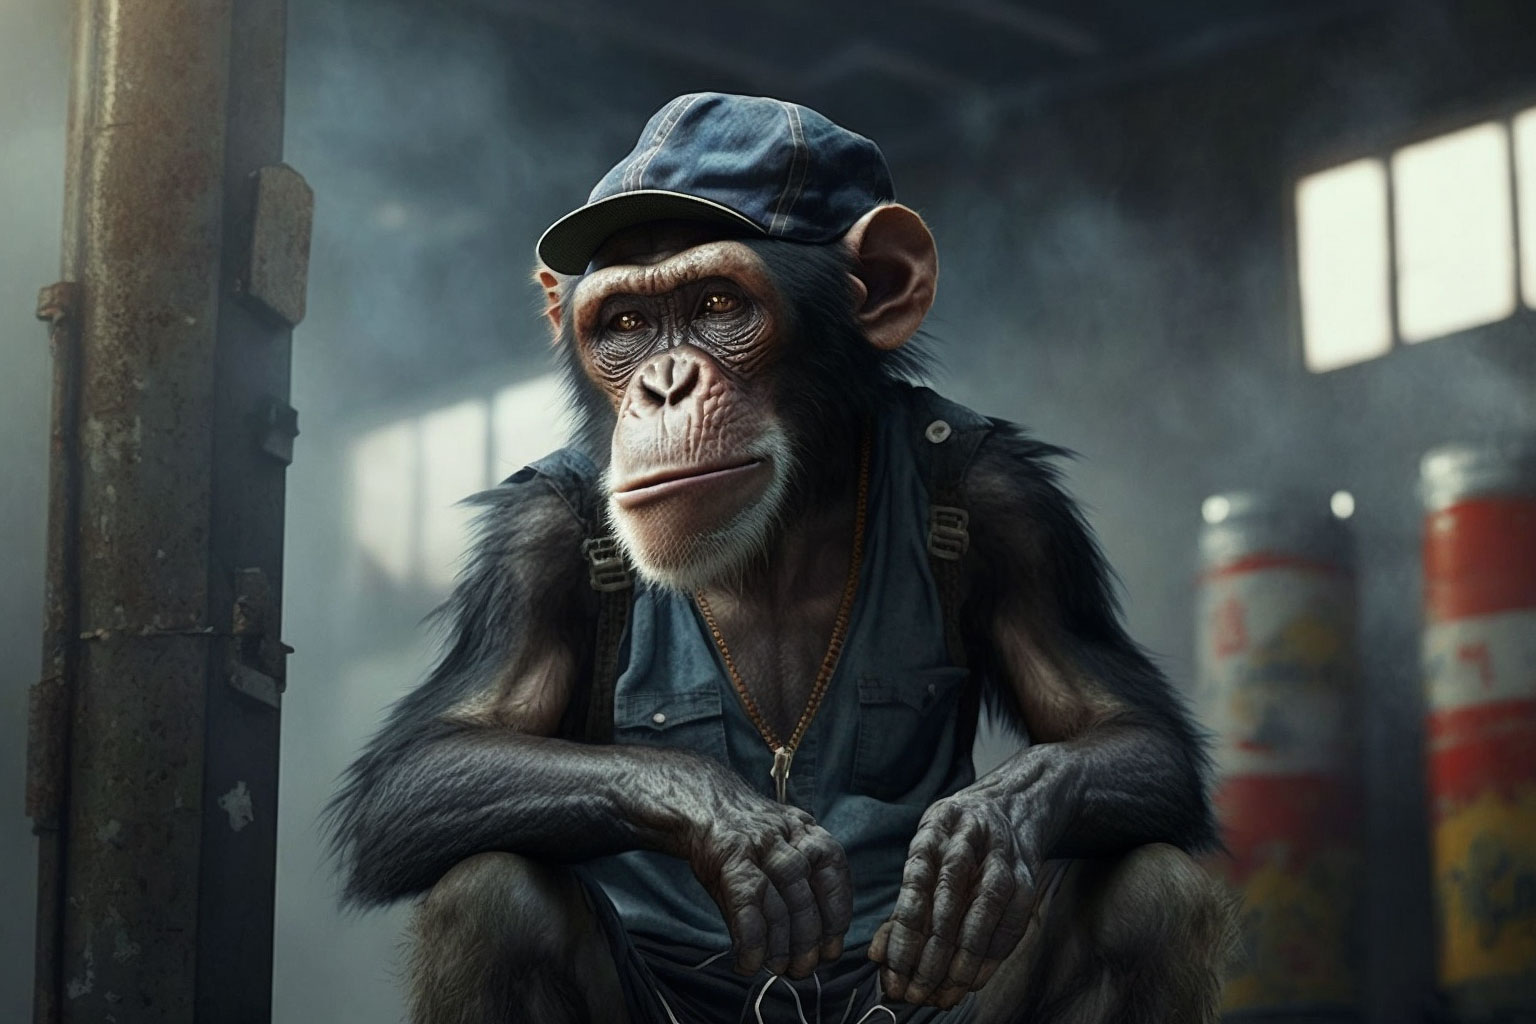 Working Class Chimpanzee